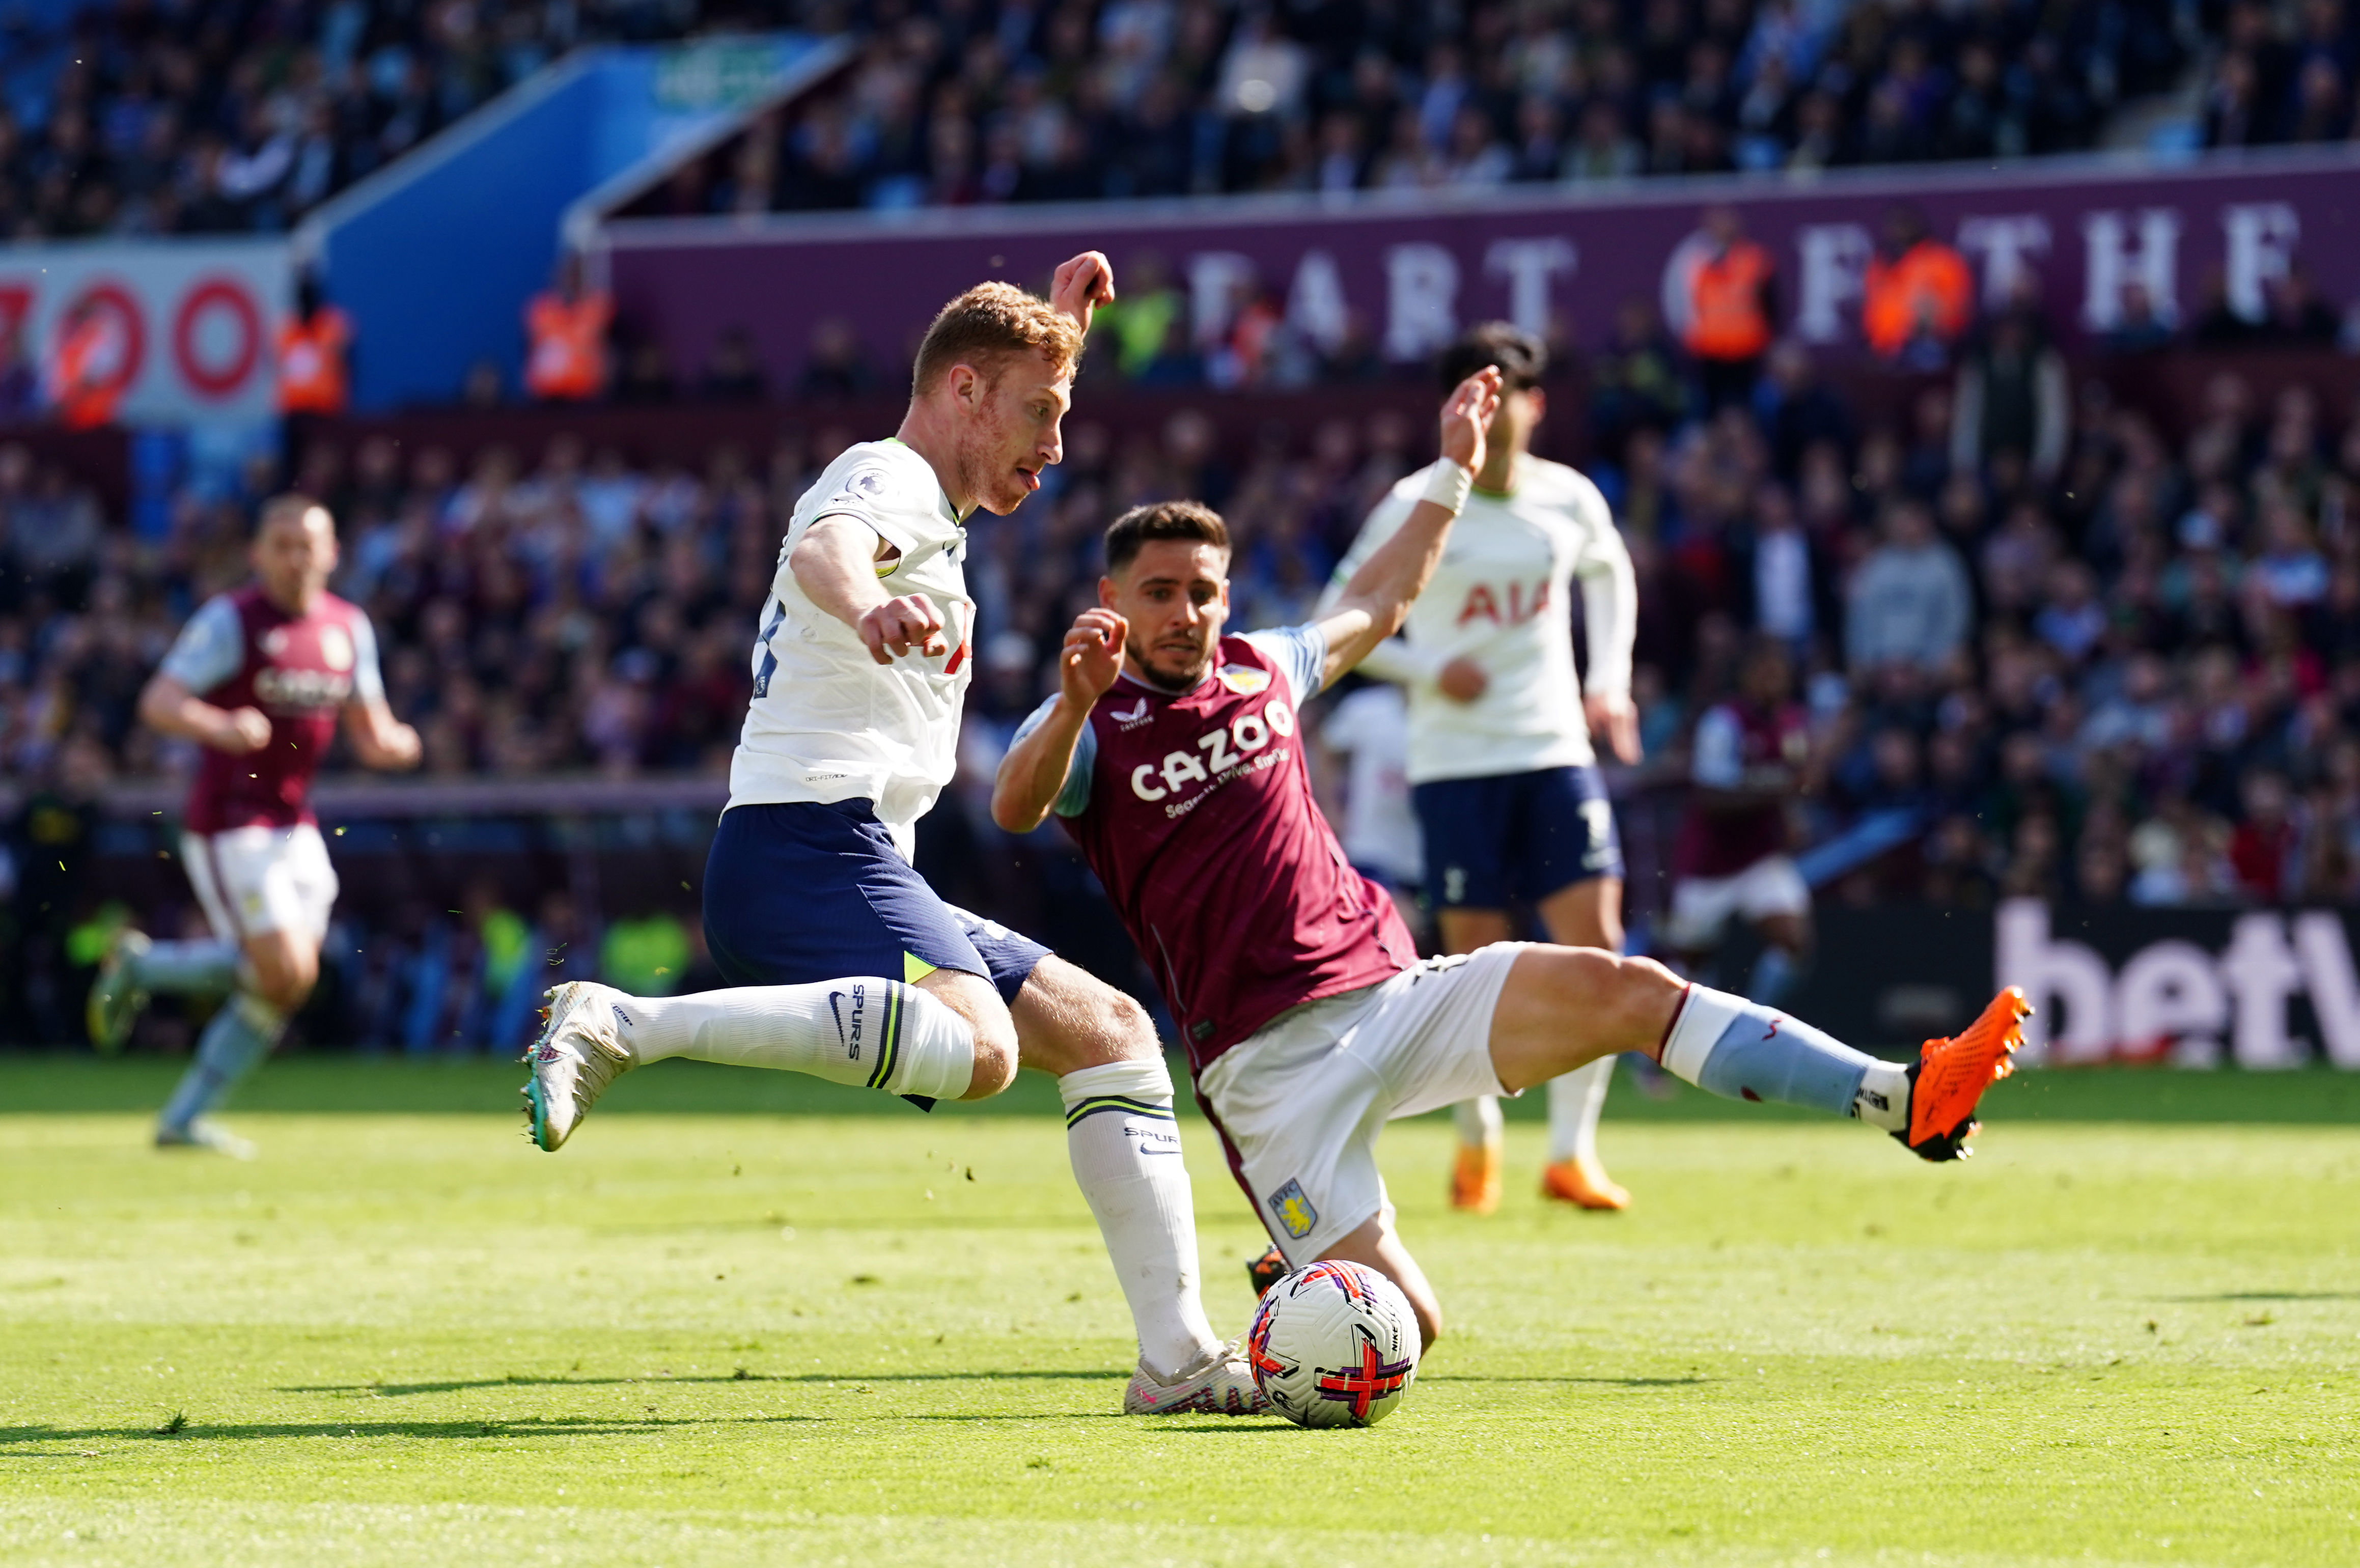 Aston Villa 2-1 Tottenham LIVE commentary: Ramsey and Luiz goals pile more  misery on Spurs as European hopefuls clash